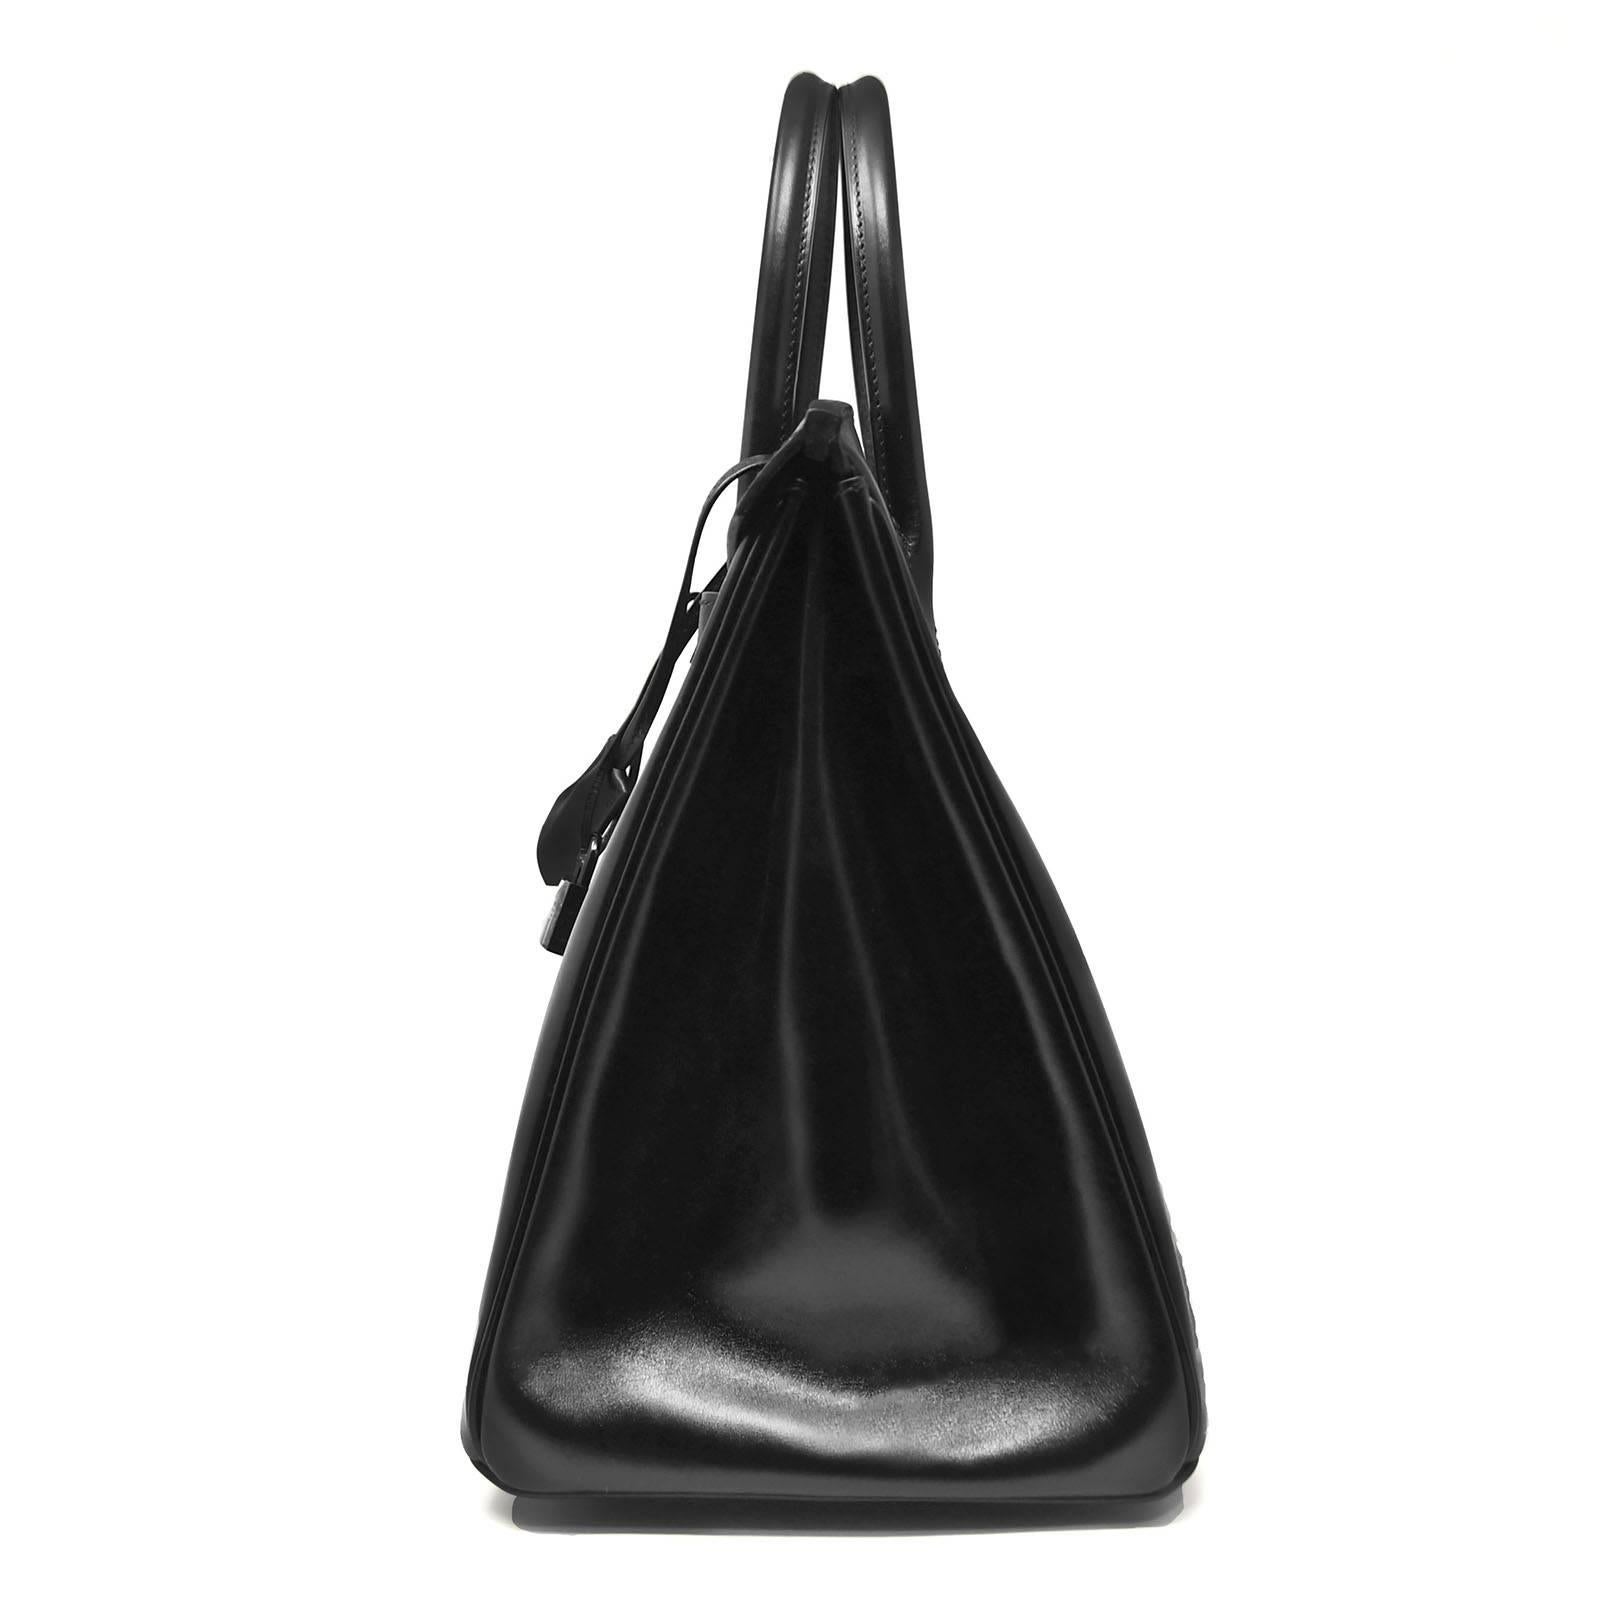 Hermes Birkin Bag 35cm So Black Box Calf BHW In New Condition For Sale In Newport, RI